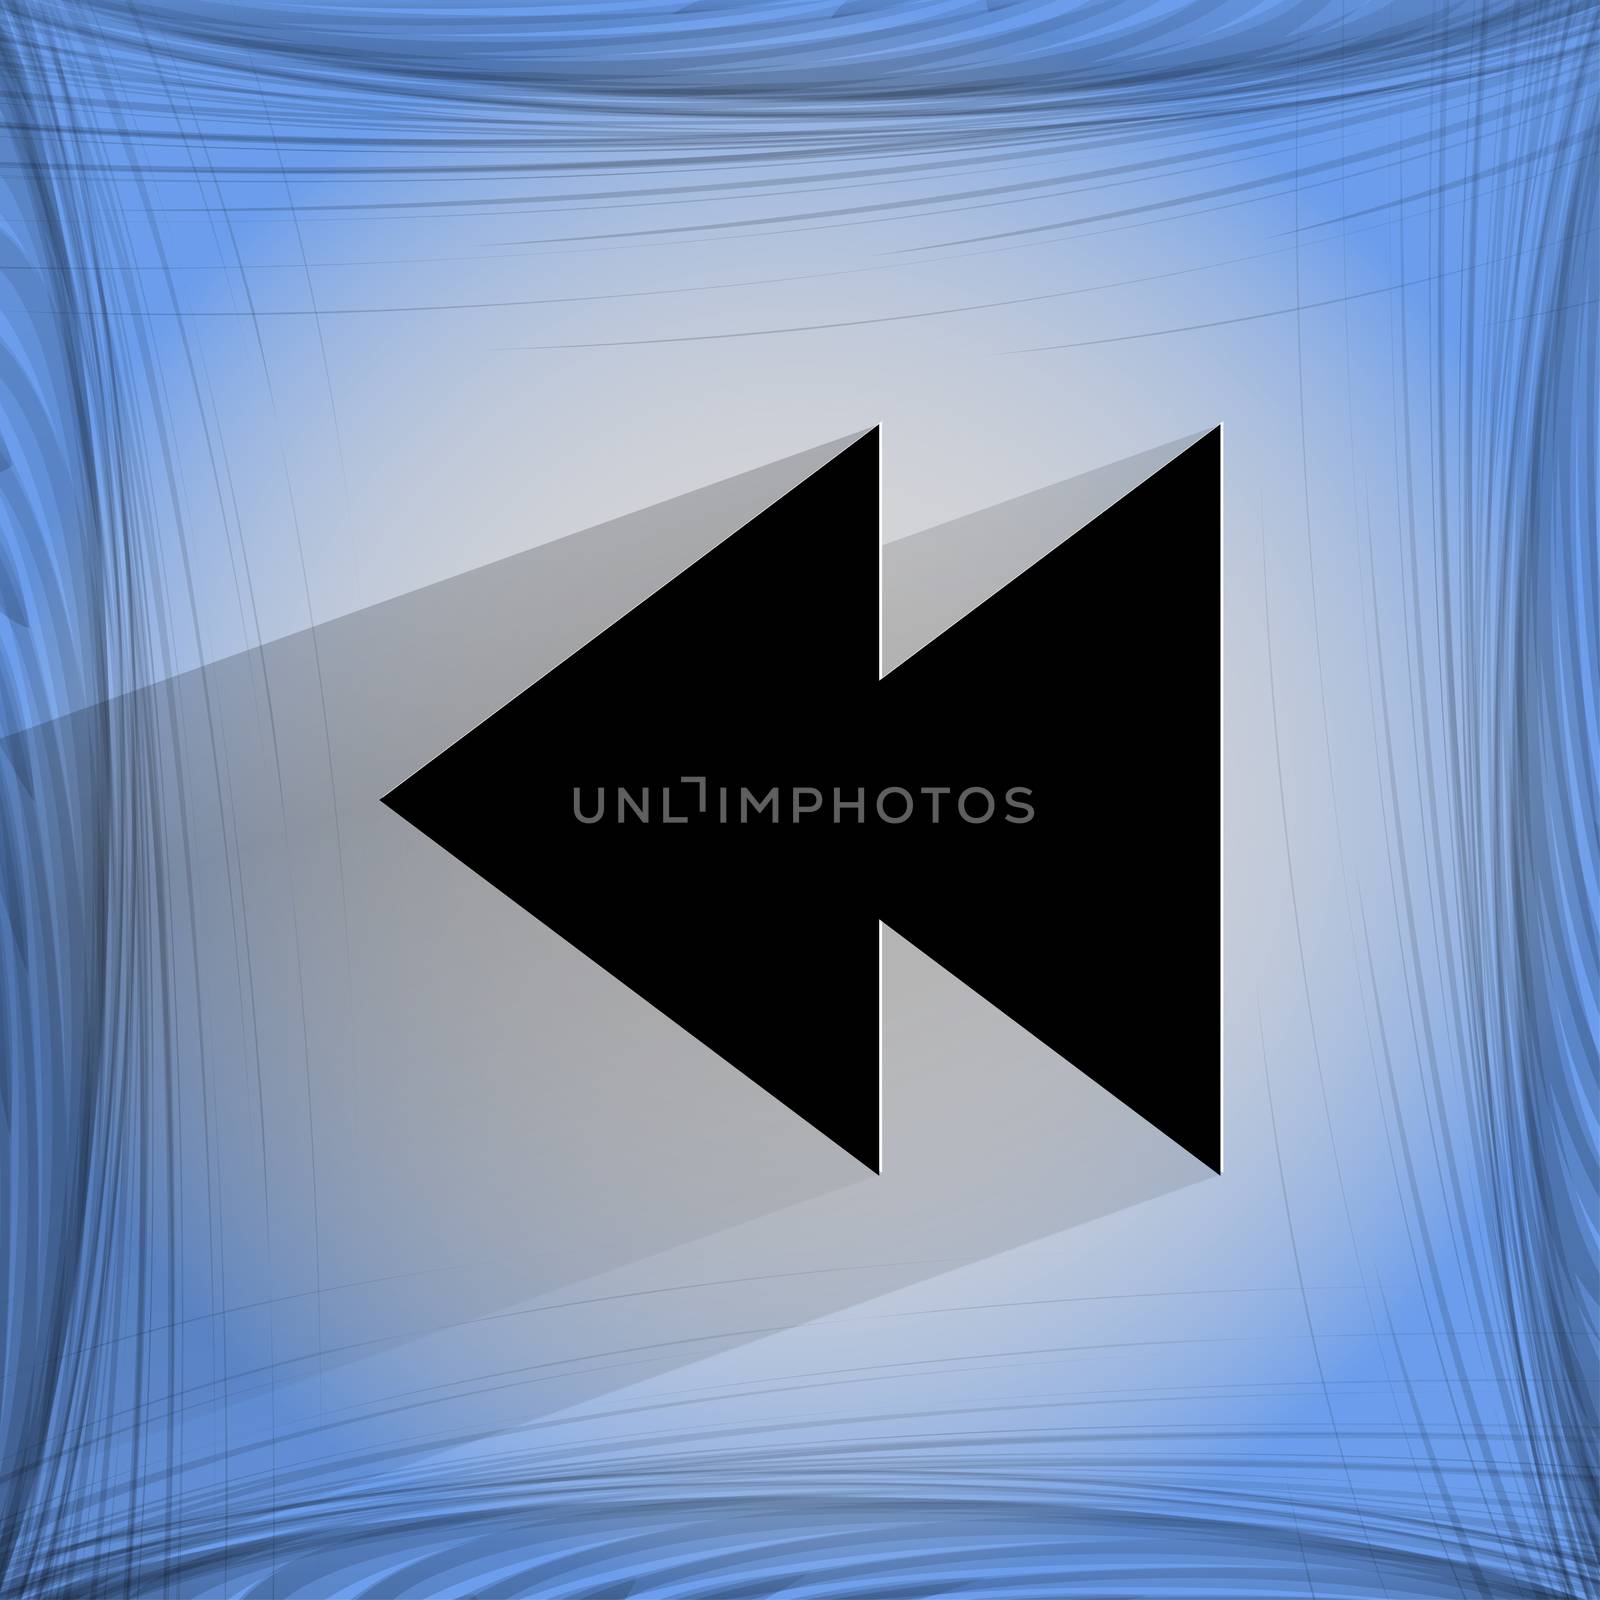 multimedia control. Flat modern web design on a flat geometric abstract background  by serhii_lohvyniuk